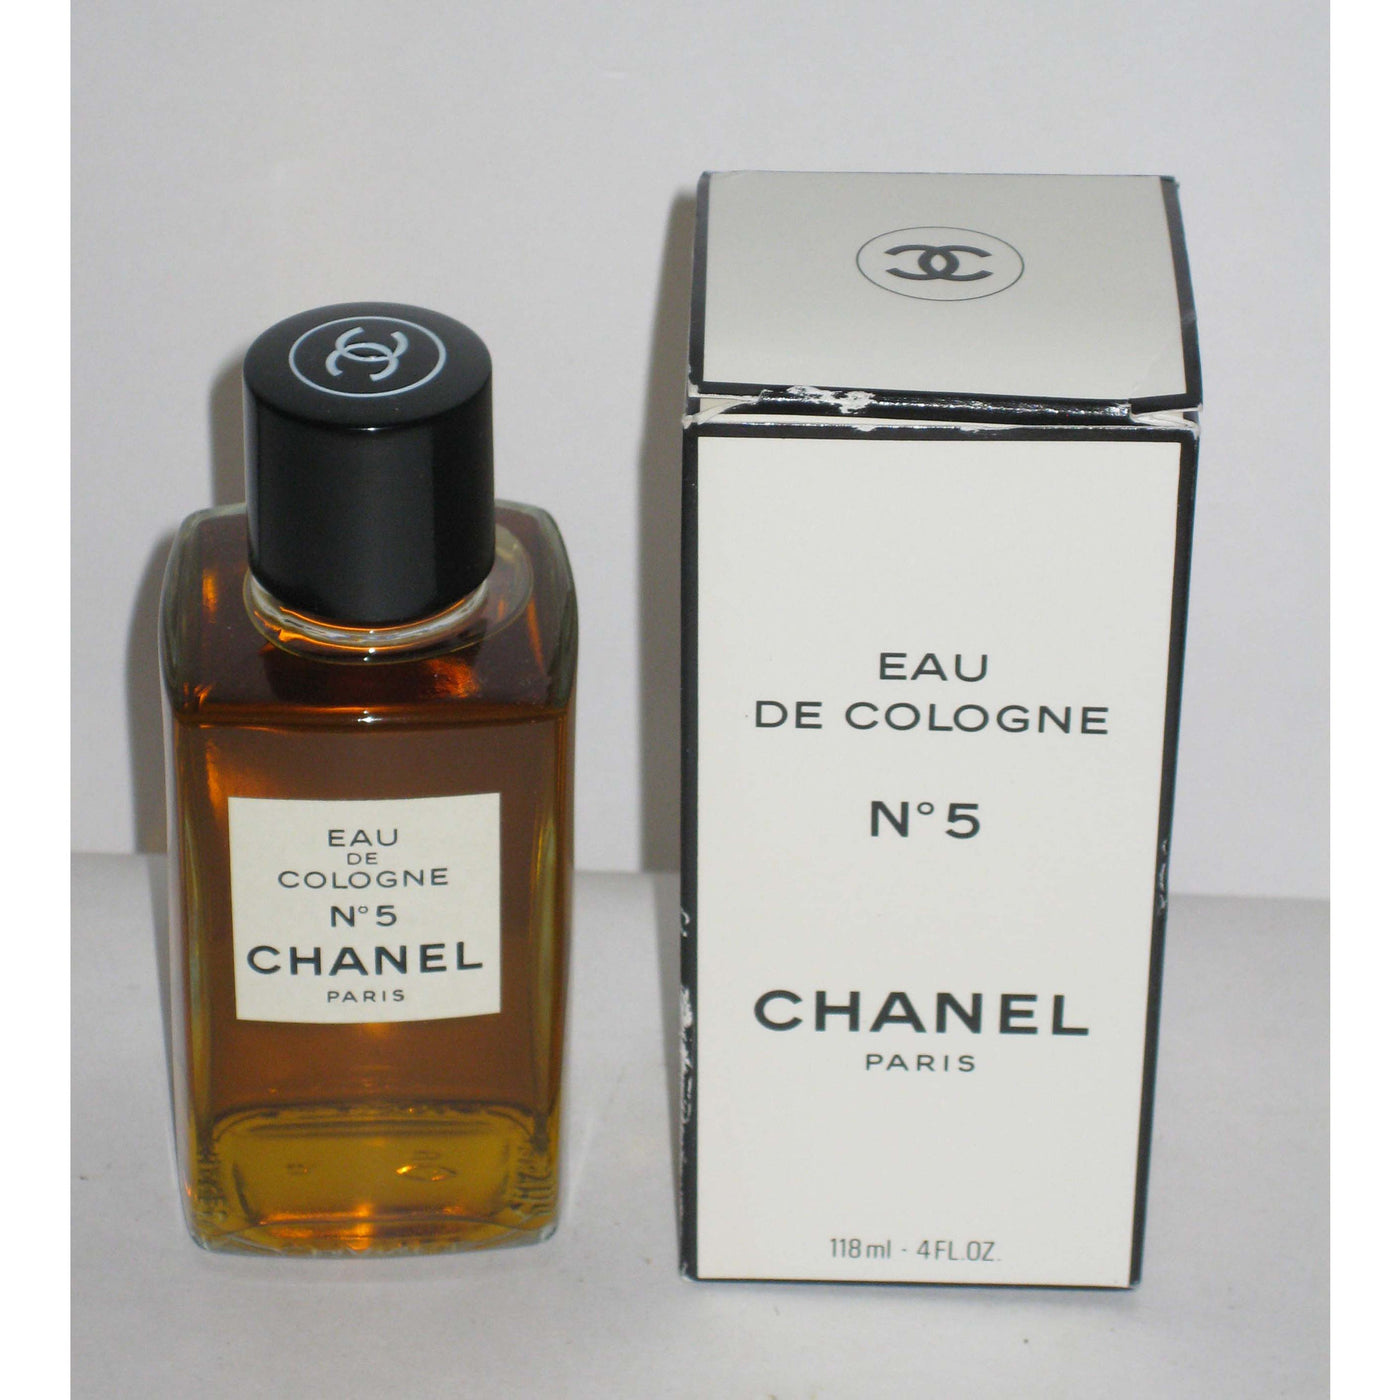 Vintage Chanel No 5 Eau Cologne